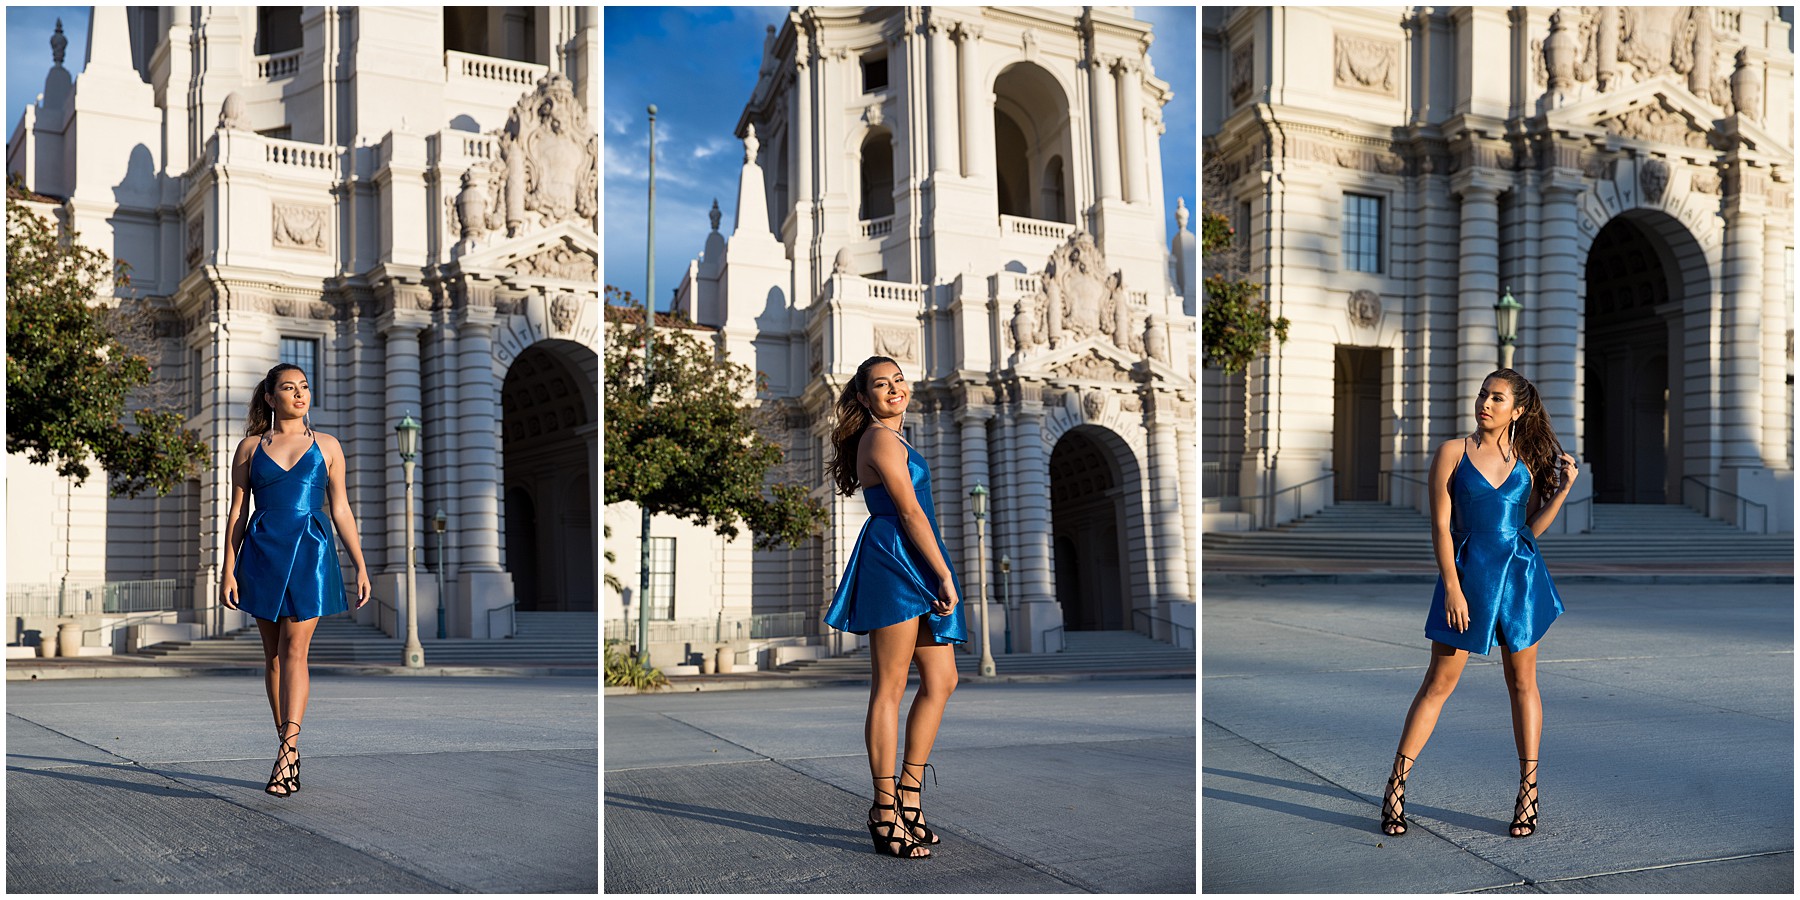 fancy blue dress full length senior portrait shots by tara rochelle photography